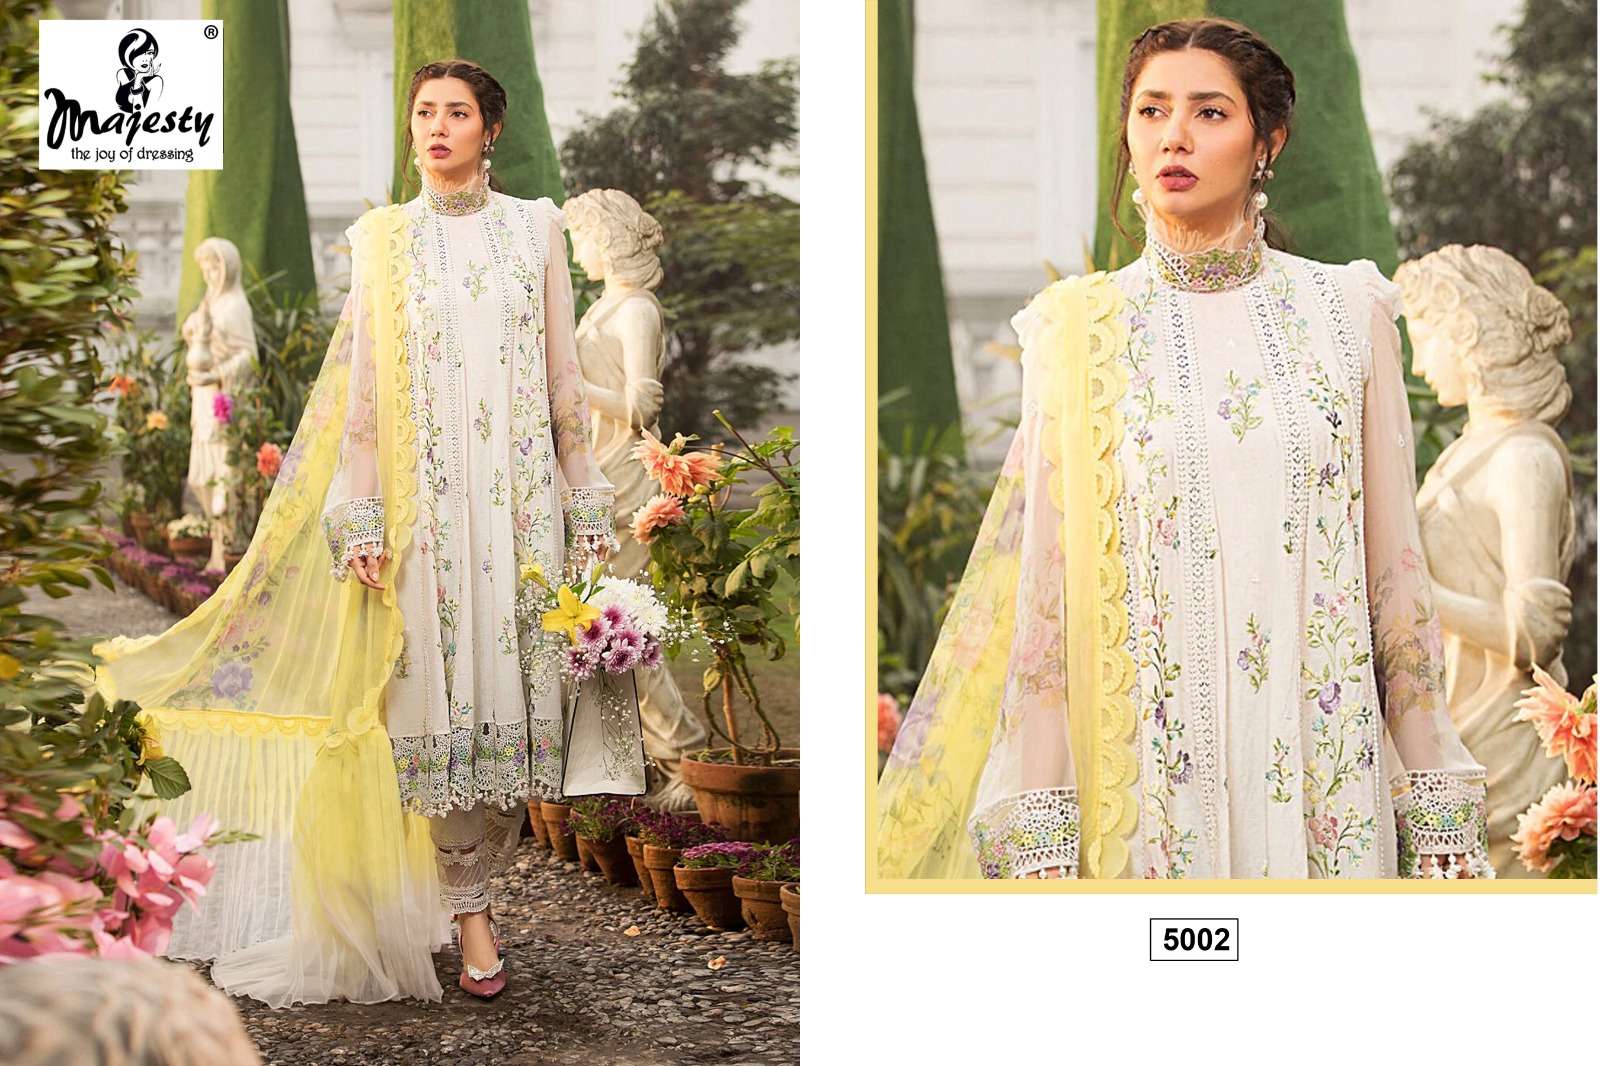 majesty maria super hit 5001-5004 series fancy designer pakistani swalwar kameez wholesaler surat 